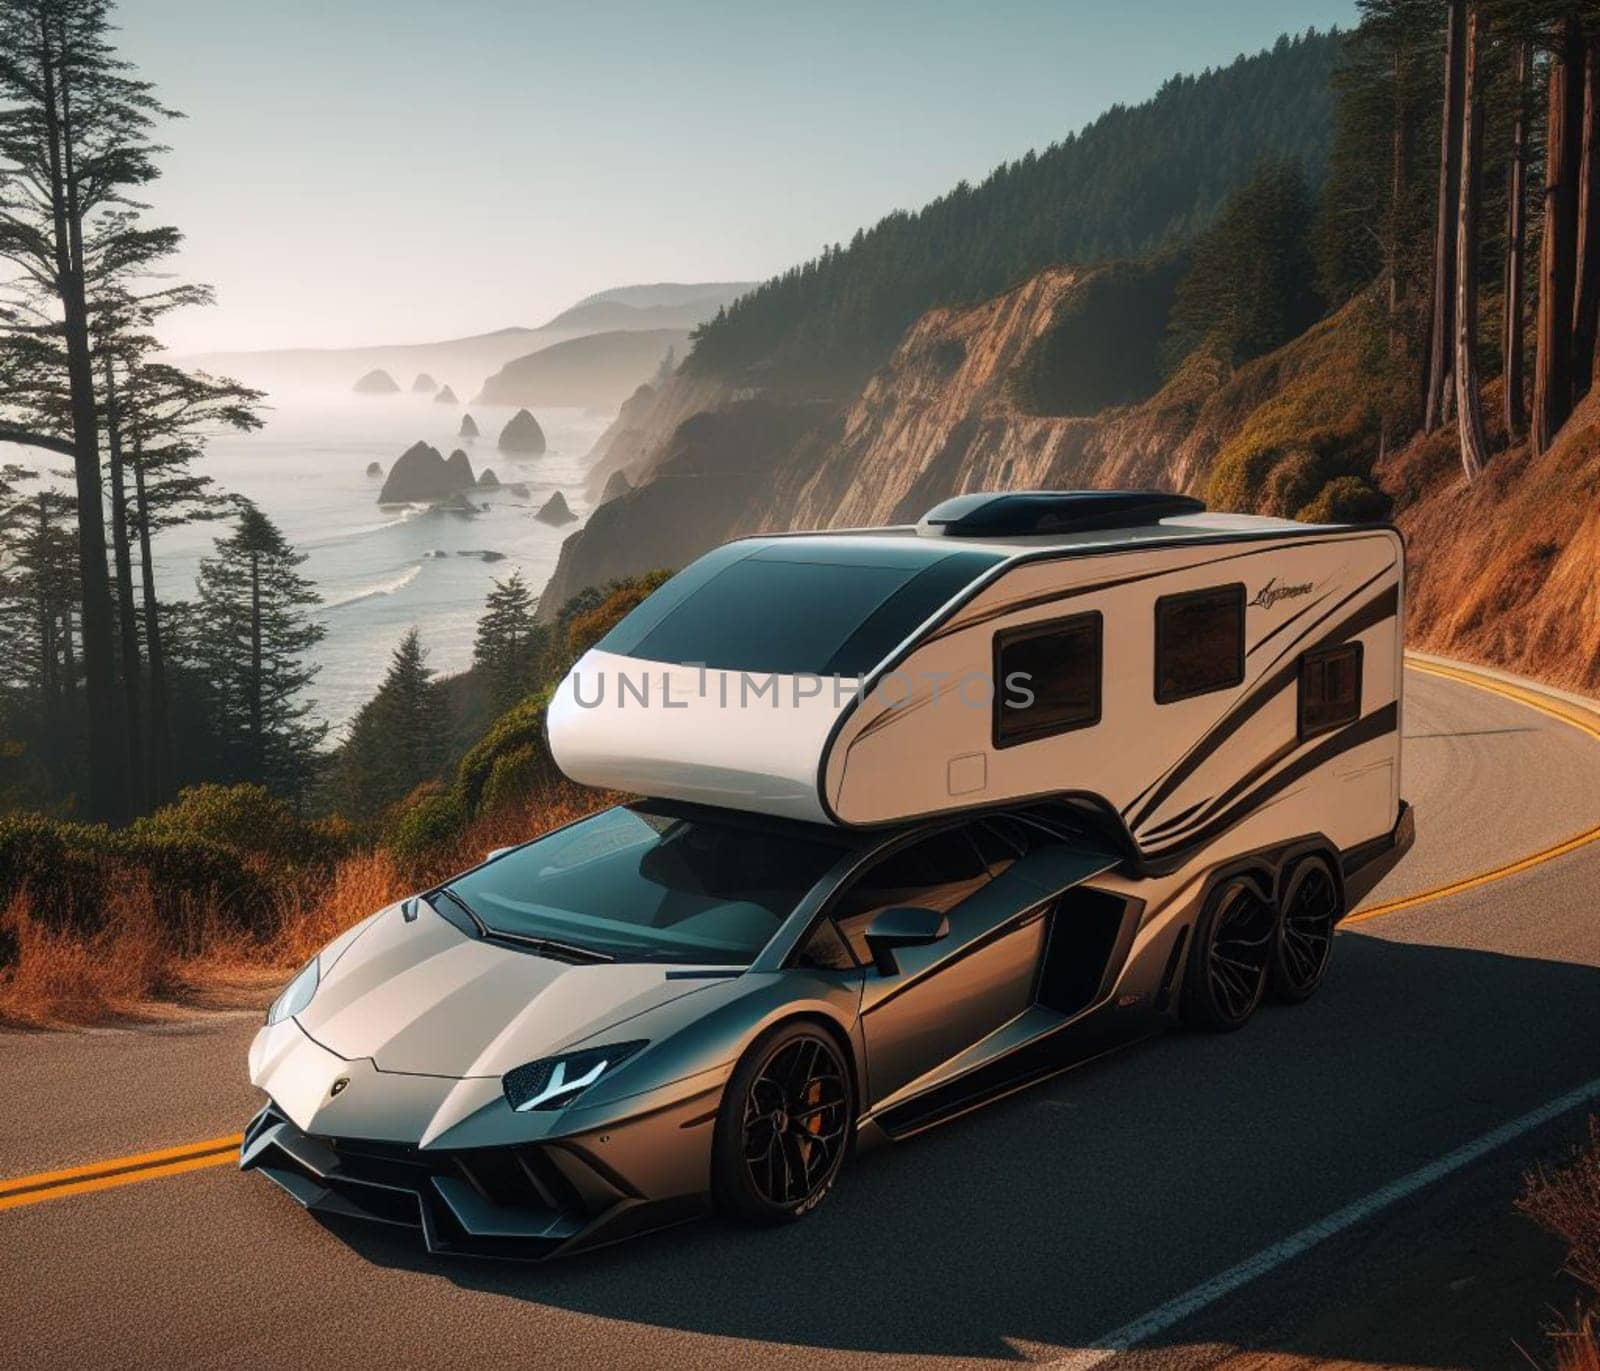 expensive fast sports supercar design camper van conversion for digital nomad avdenture weekender by verbano